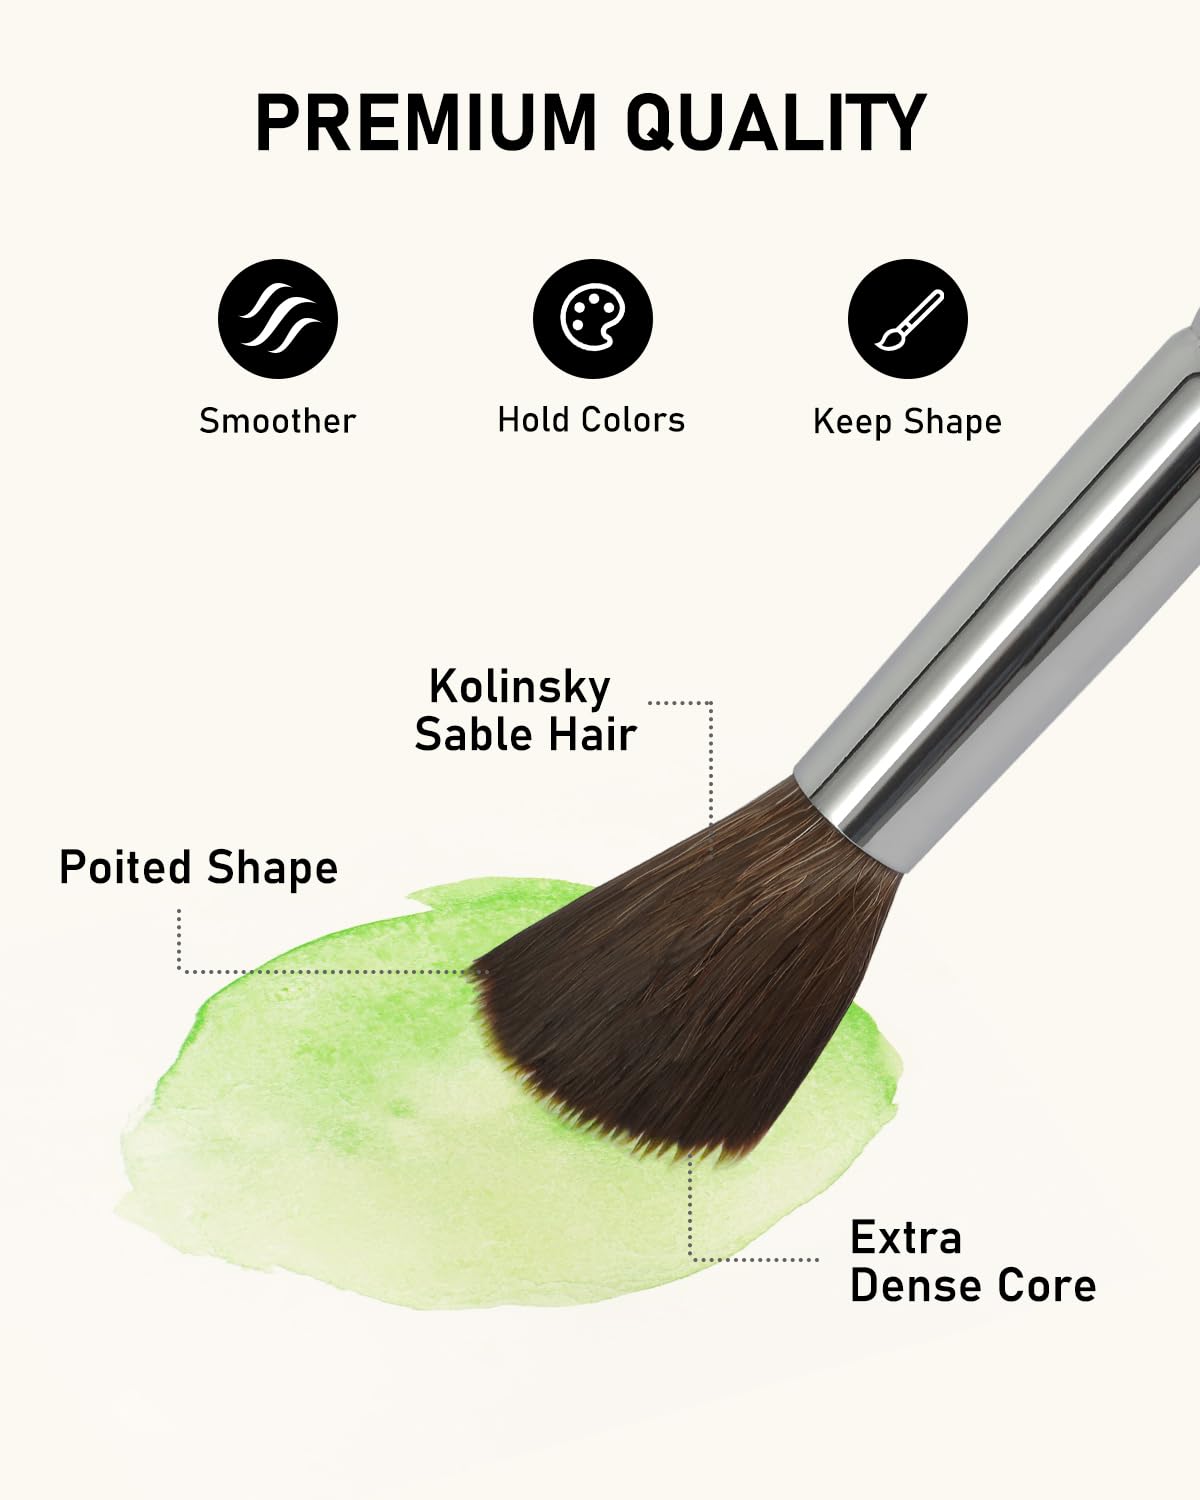 Nicpro Sable Watercolor Brushes Set Professional, 12 PCS Artist Paint